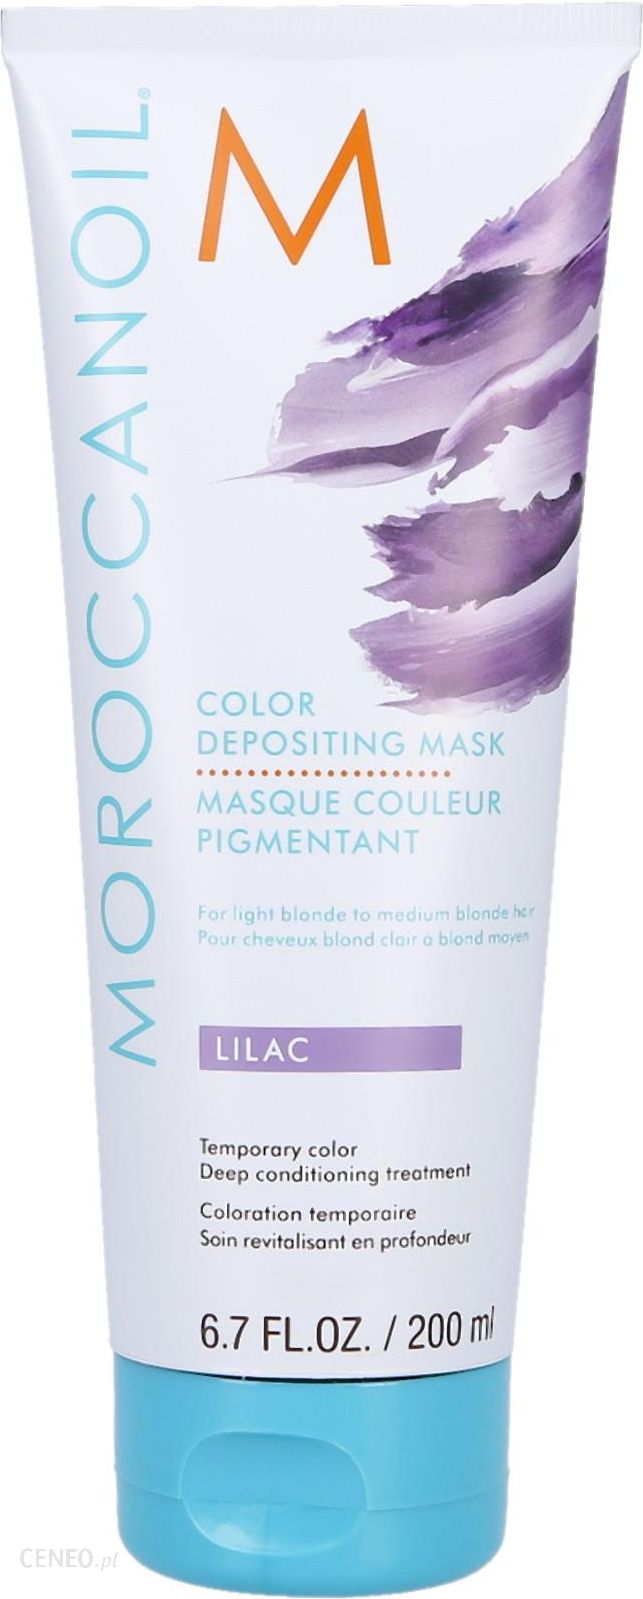 Moroccanoil maska koloryzująca Lilac Maska Color Depositing Lilac 200ml